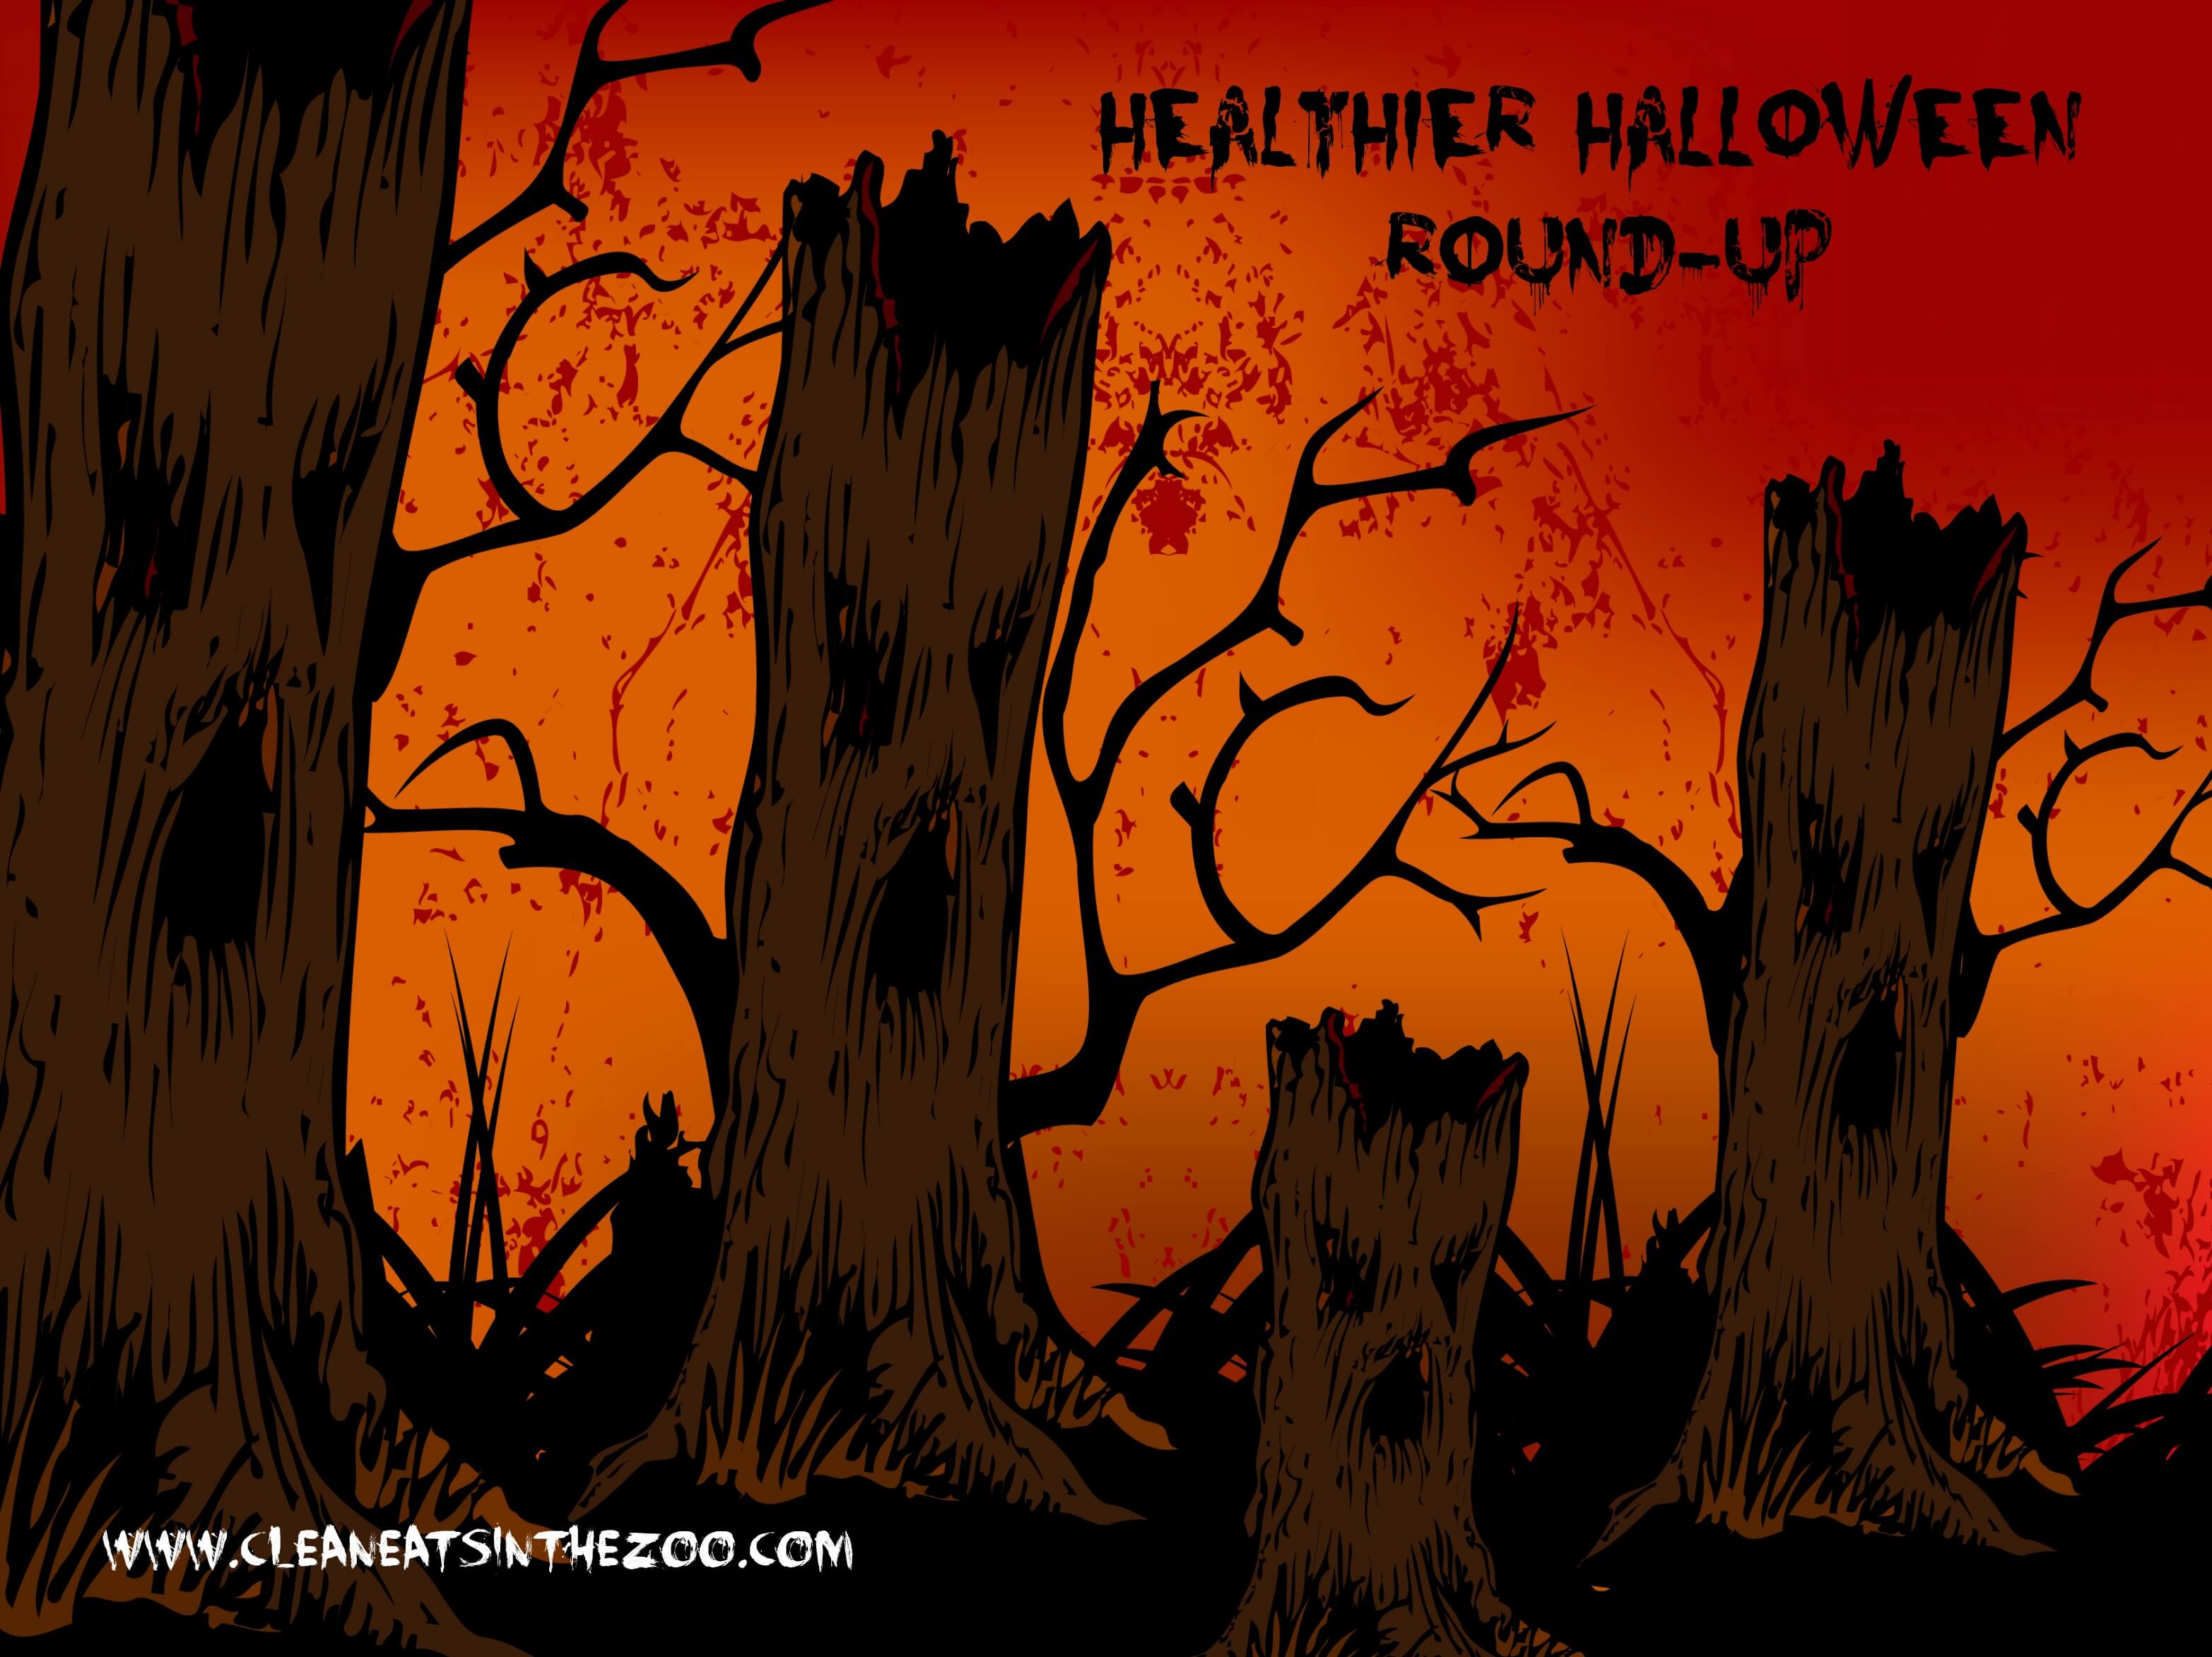 A Healthi{er} Halloween Roundup!